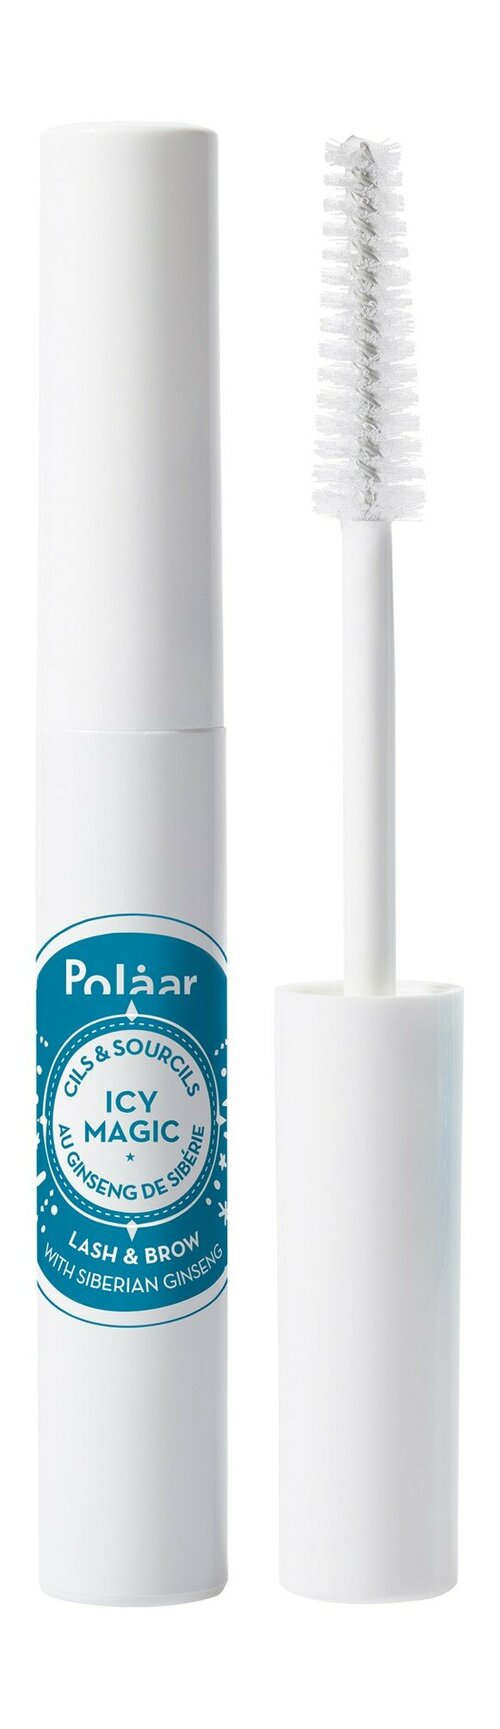 POLAAR Icy Magic Lash&Brow Booster Сыворотка активатор роста для ресниц и бровей,6 мл